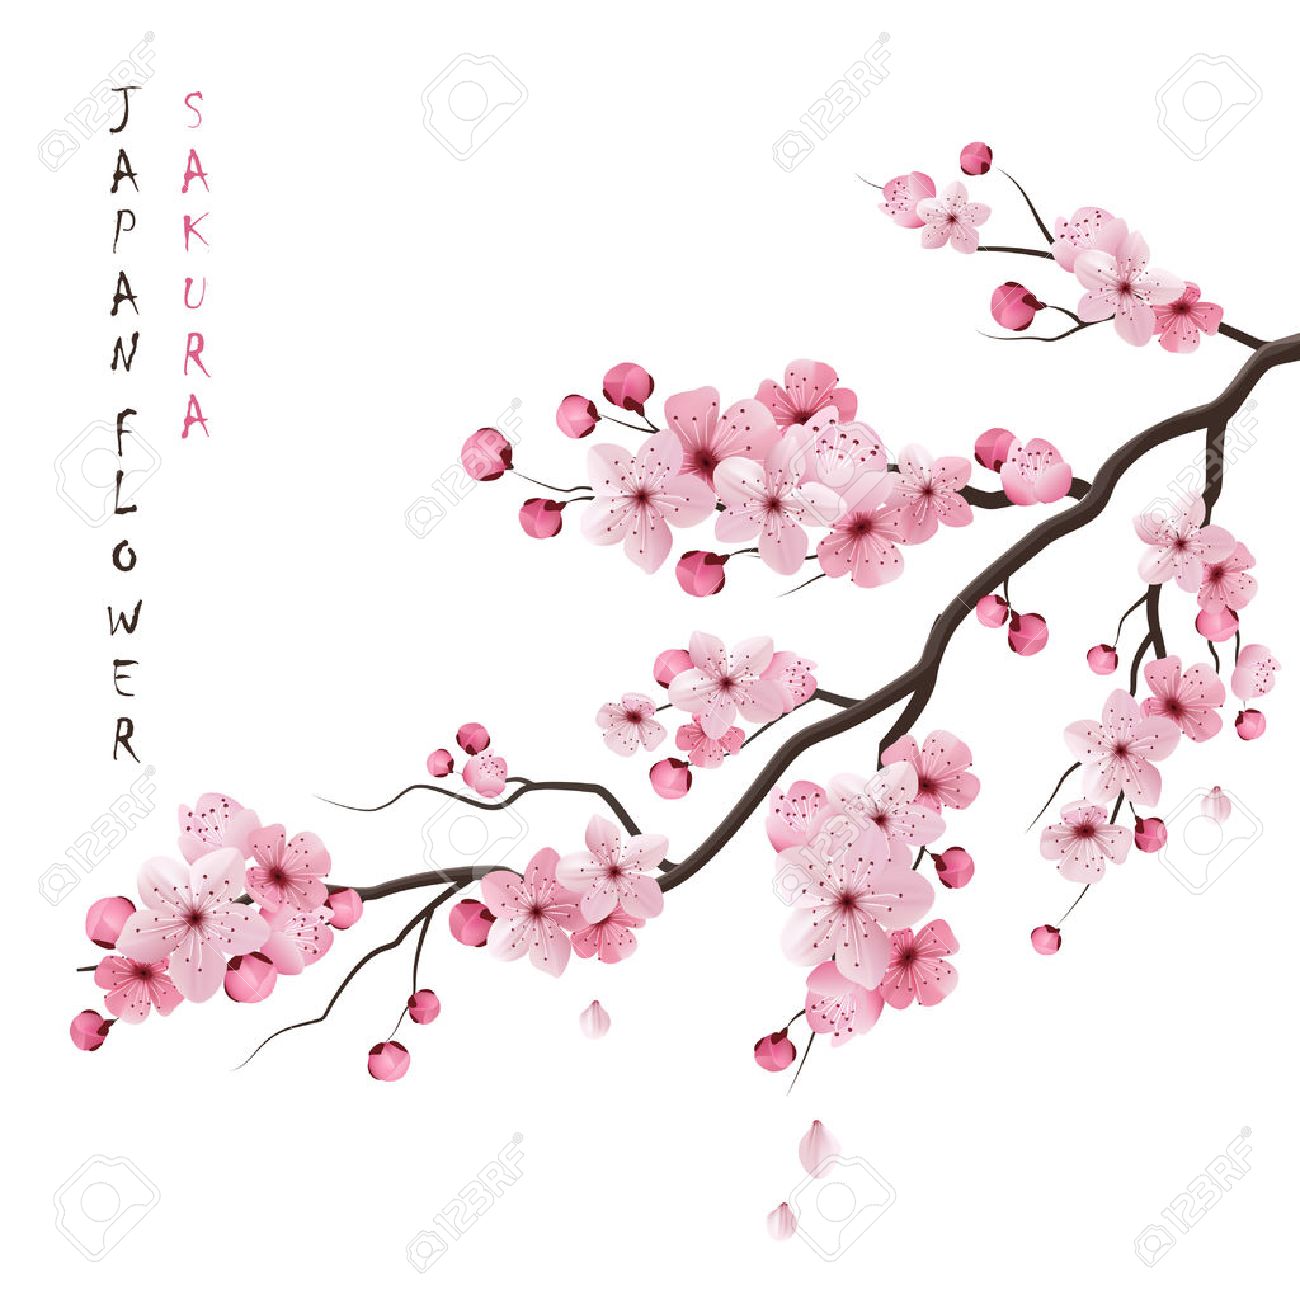 50704476-realistic-sakura-japan-cherry-branch-with-blooming-flowers-vector-illustration.jpg